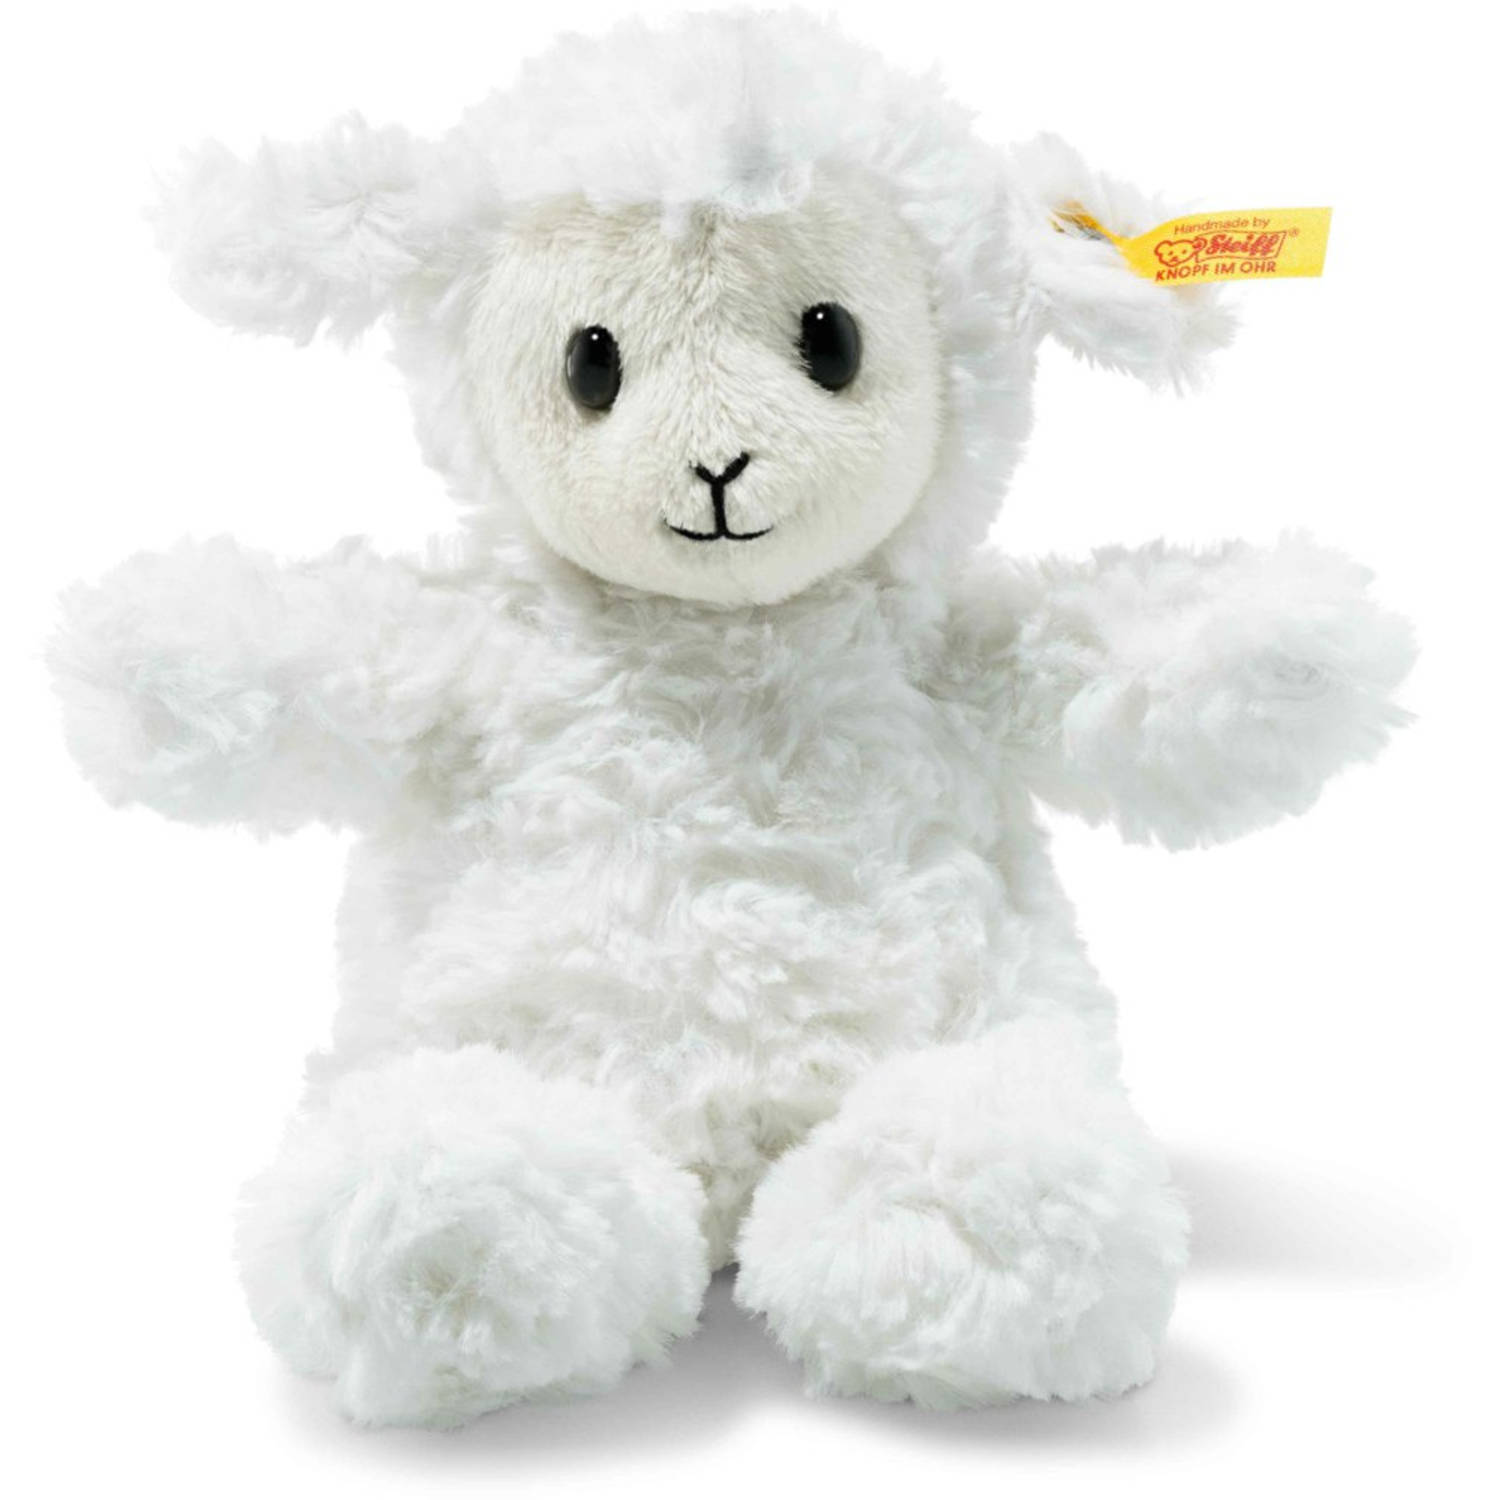 Steiff Soft Cuddly Friends Fuzzy Lamb